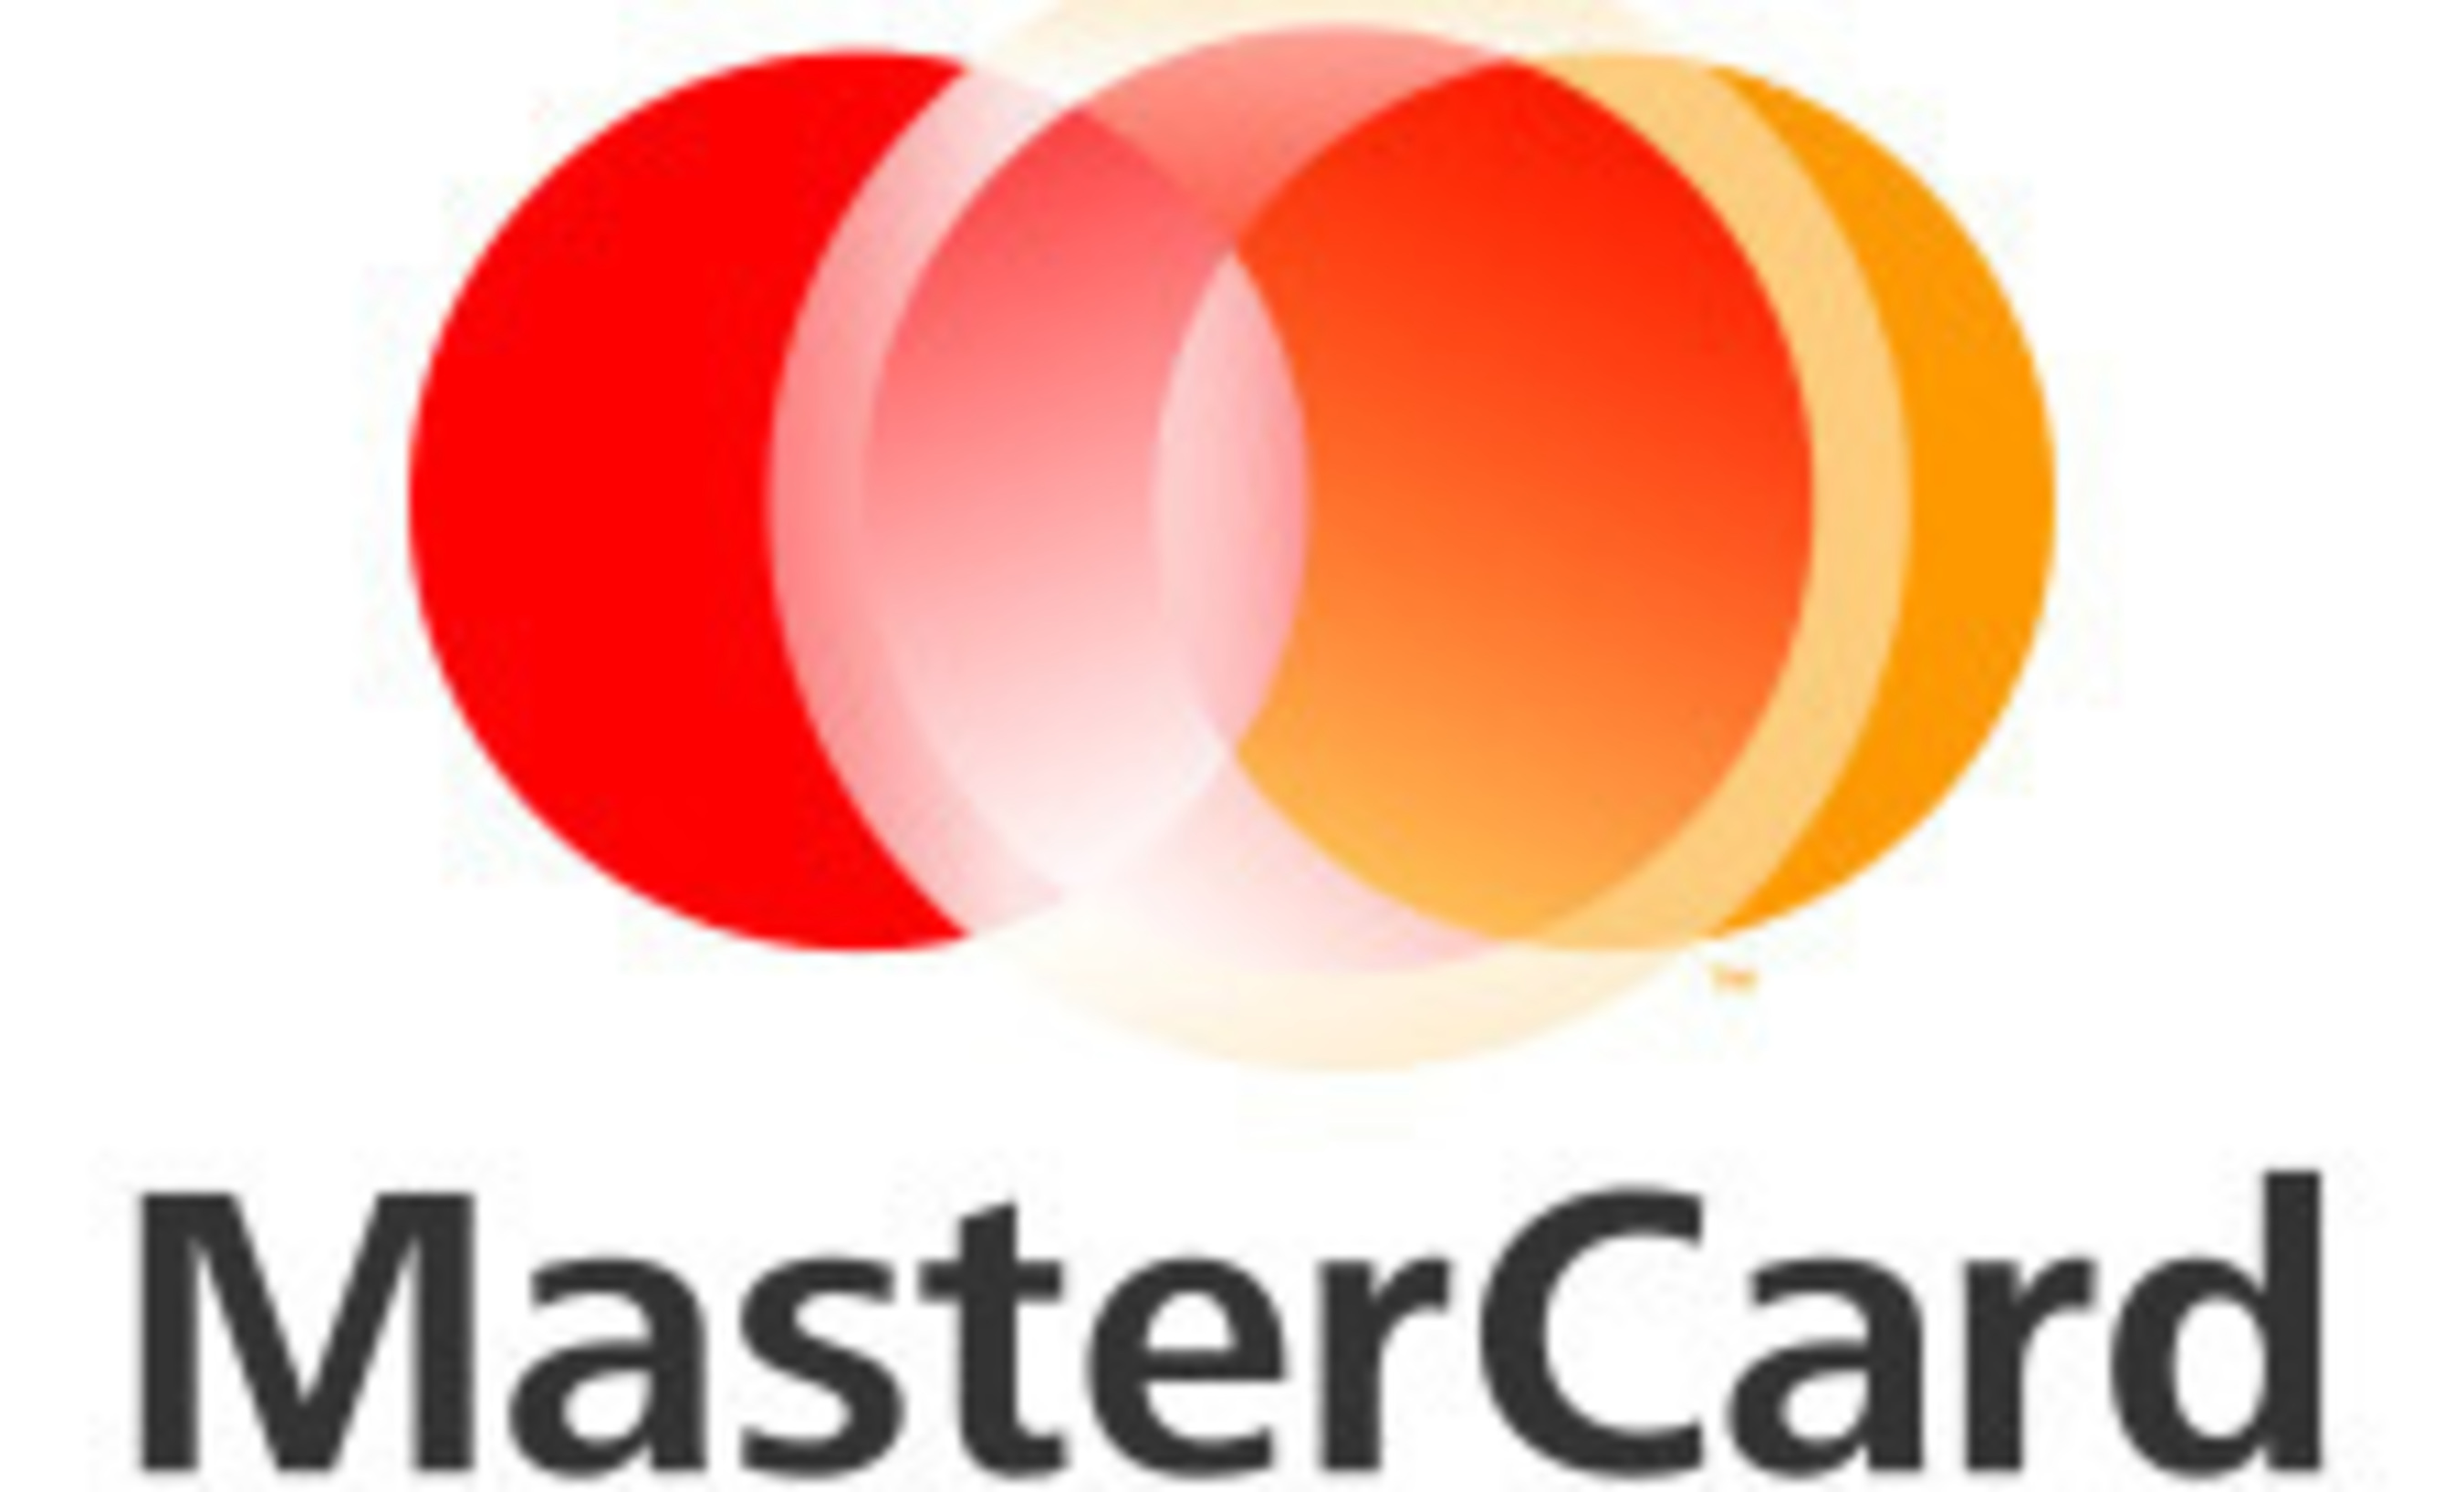 MasterCard logo. (PRNewsFoto/Mastercard)